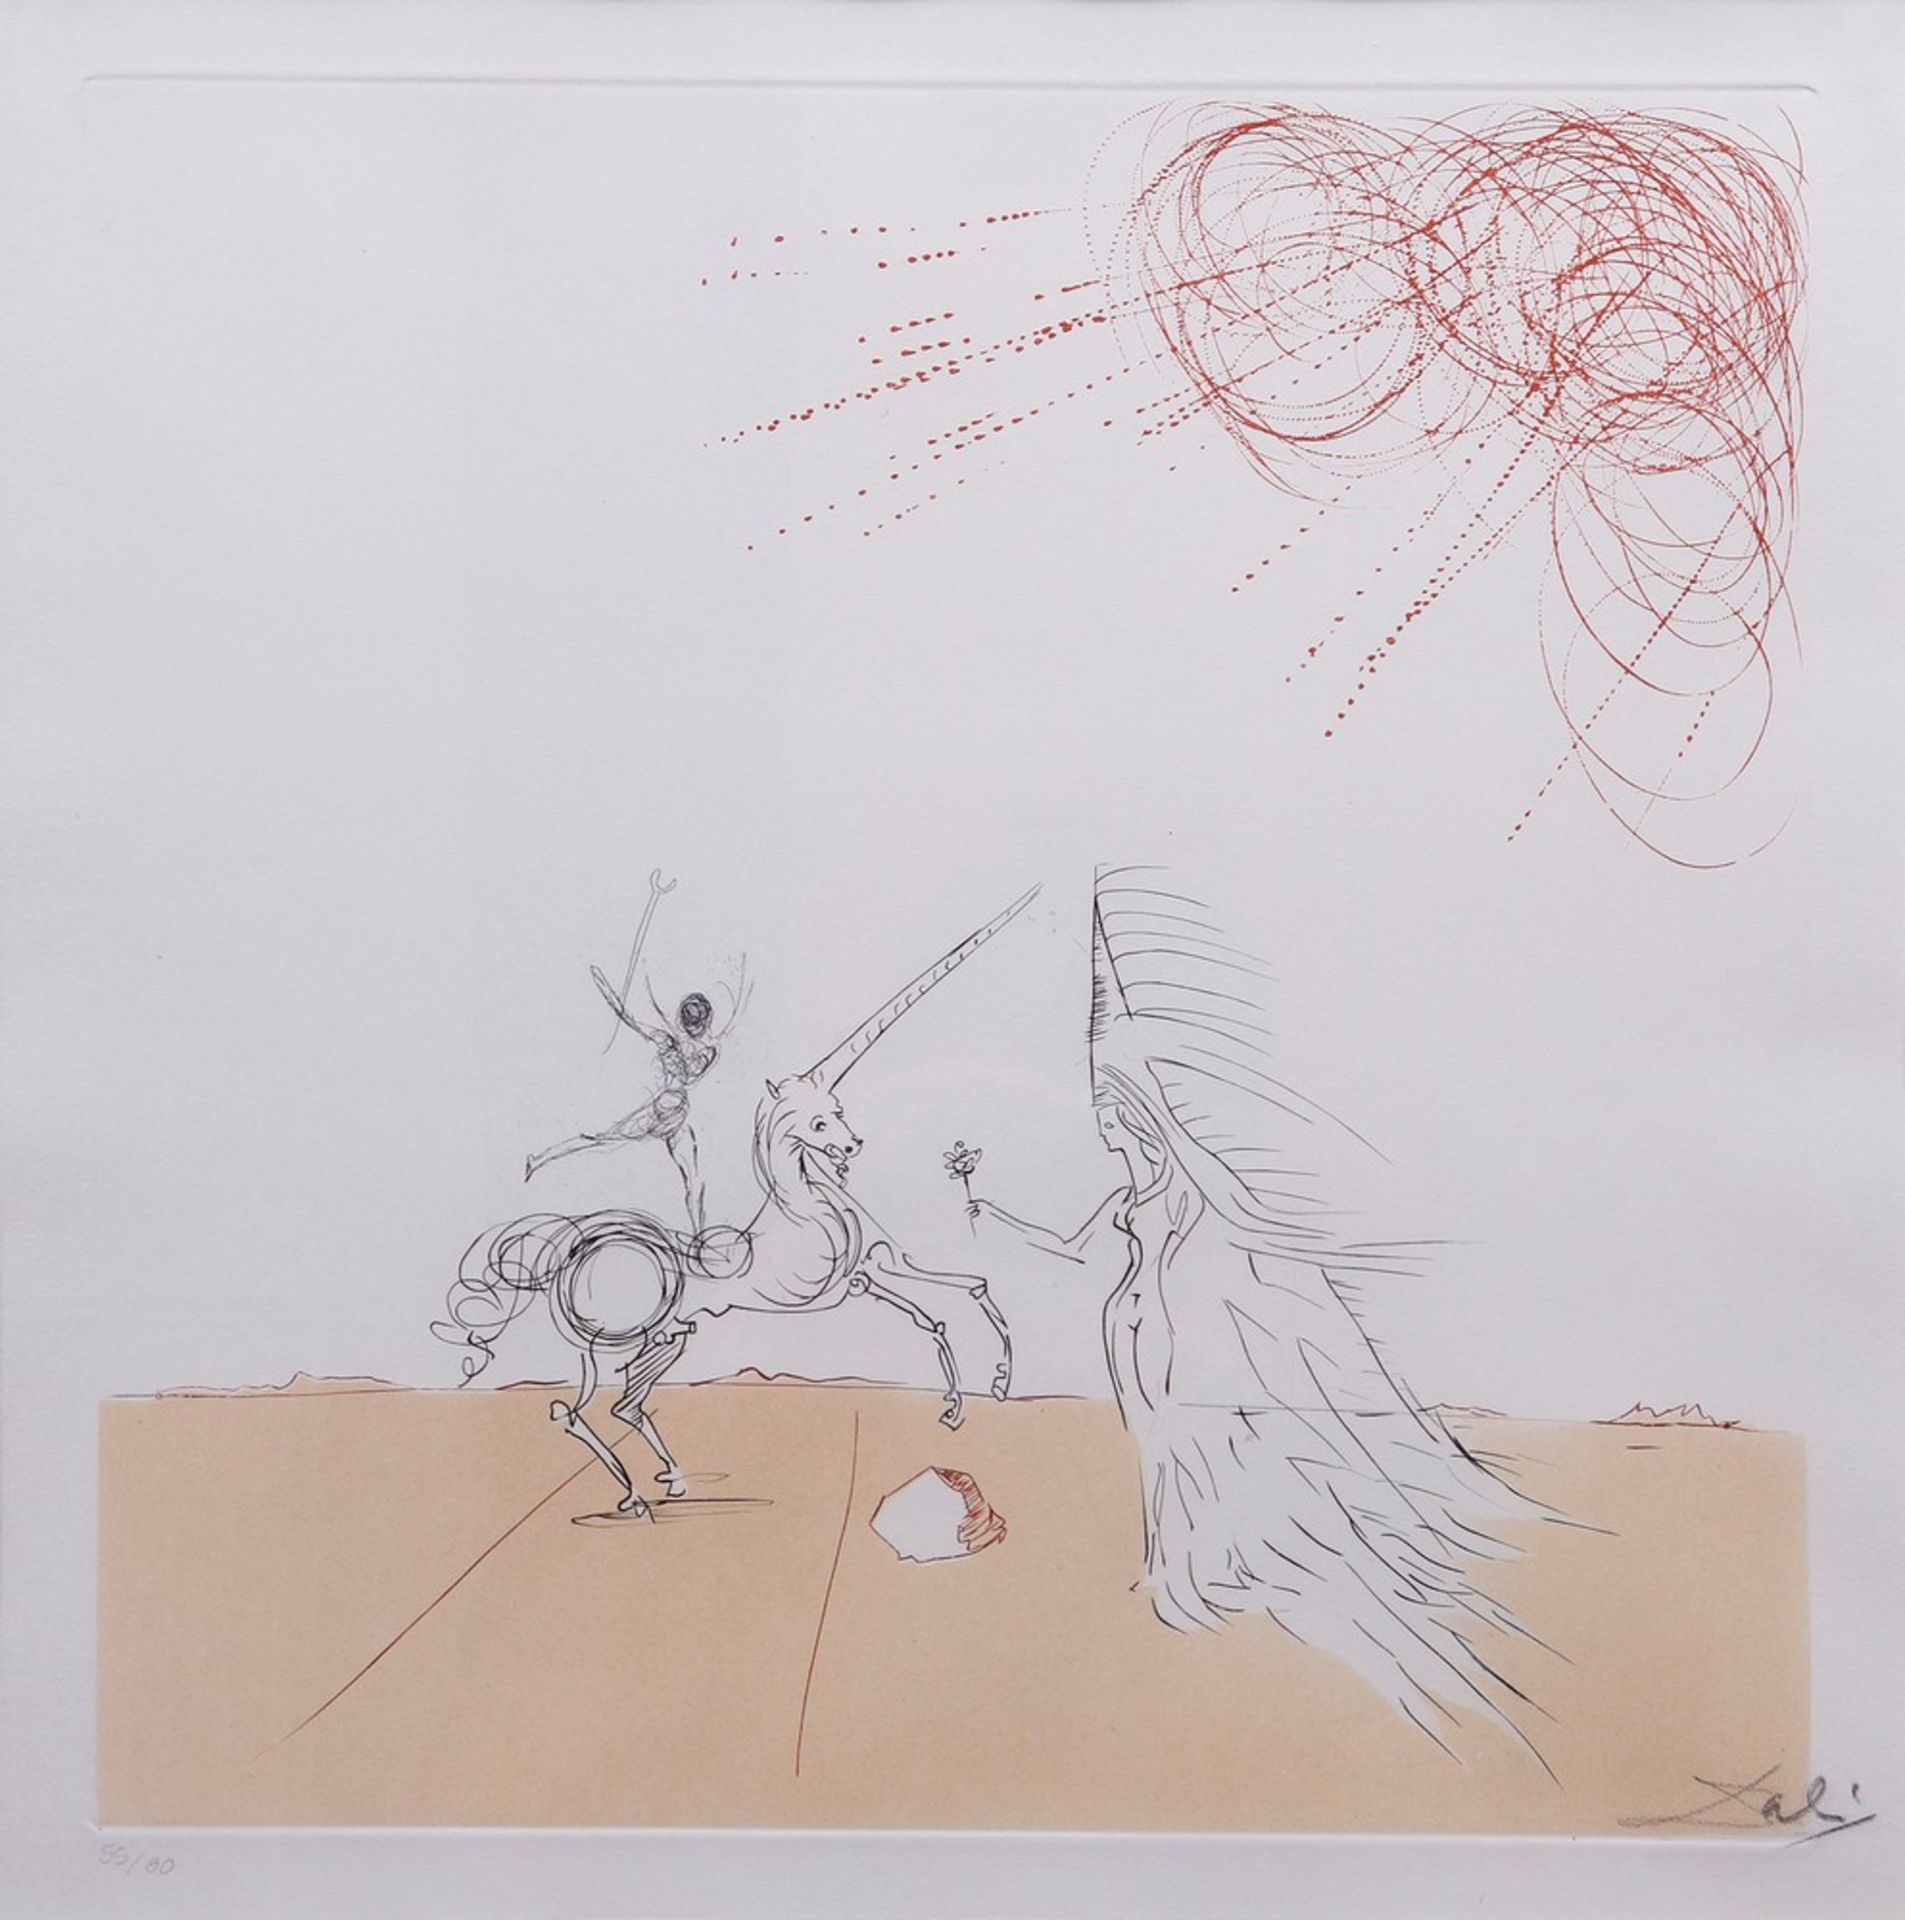 Salvador Felipe Jacinto Dalí i Domènech (1904, Figueres, Catalonia - 1989, ibid.) - Image 2 of 3